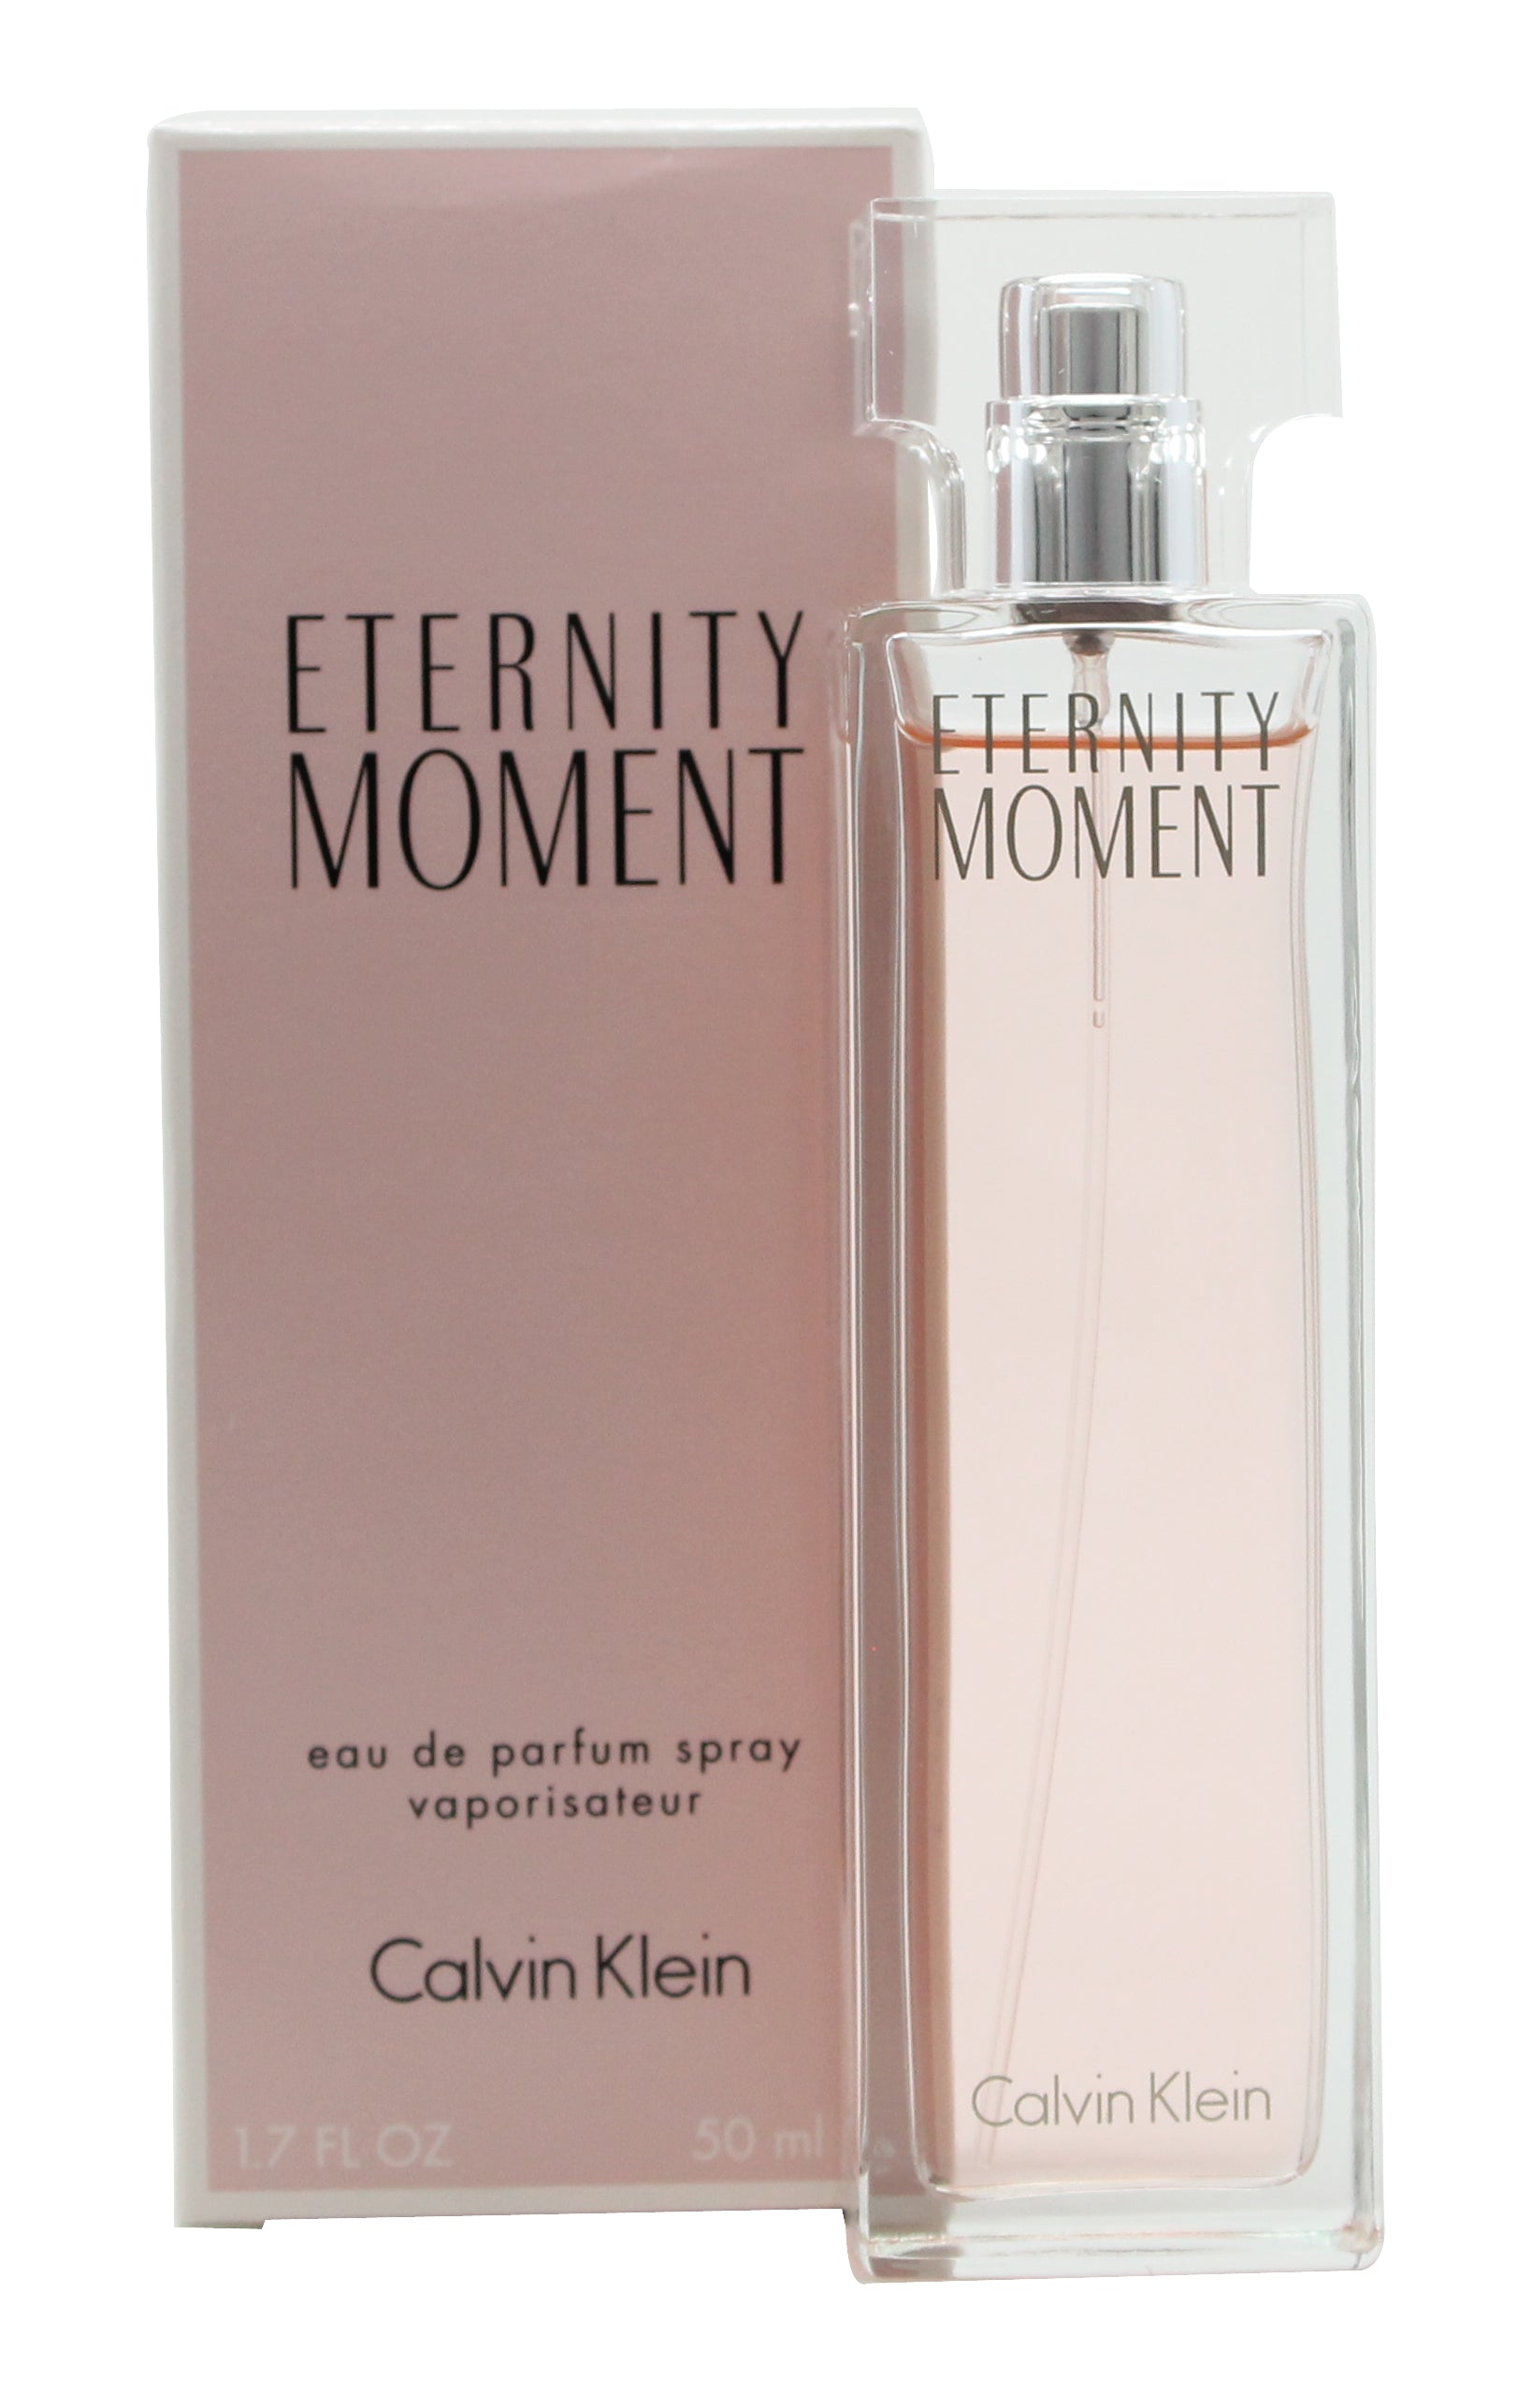 View Calvin Klein Eternity Moment Eau de Parfum 50ml Spray information